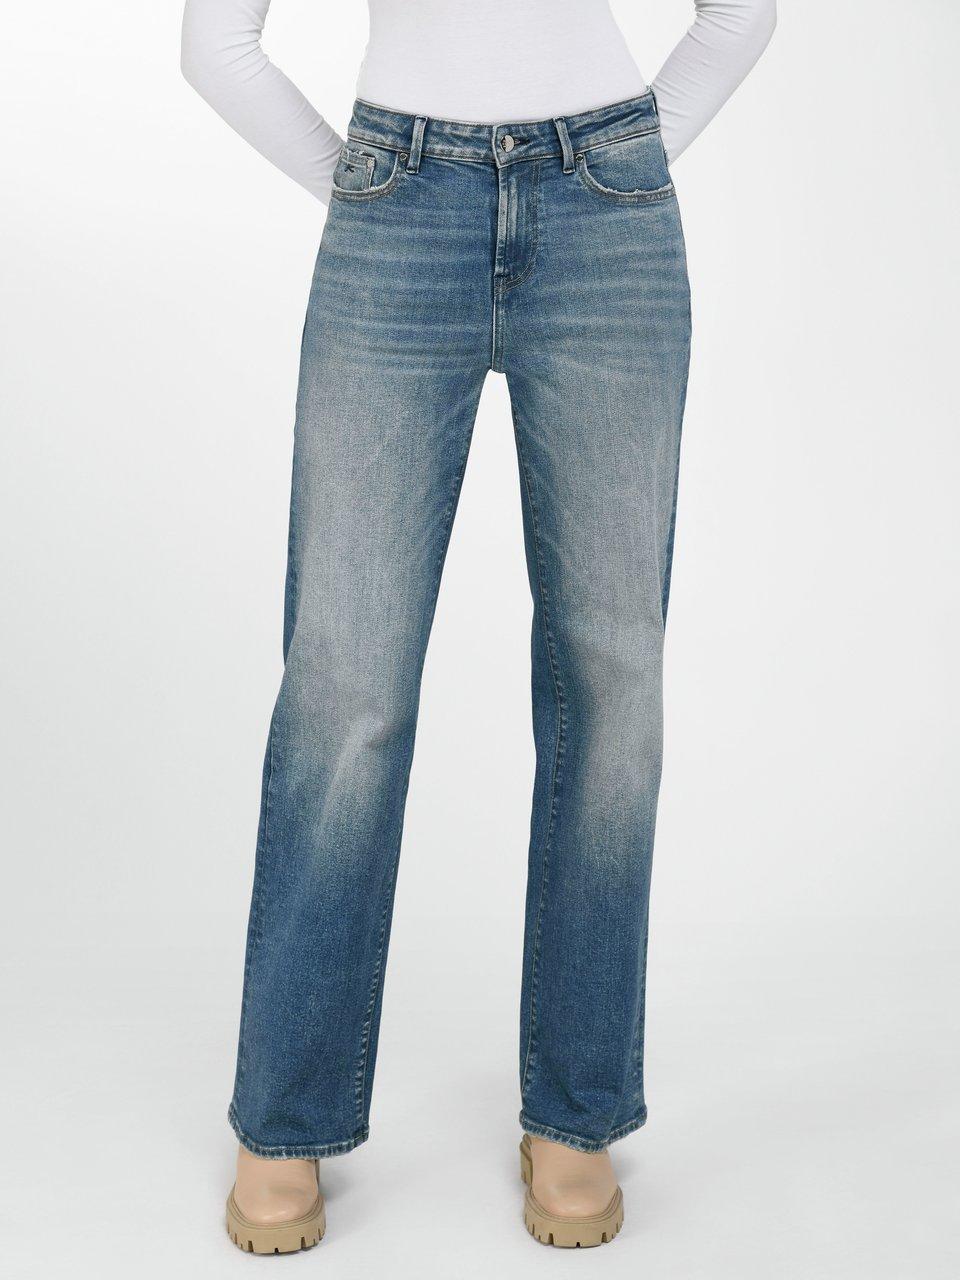 Denham Jeanmaker Dames Bootcut jeans |